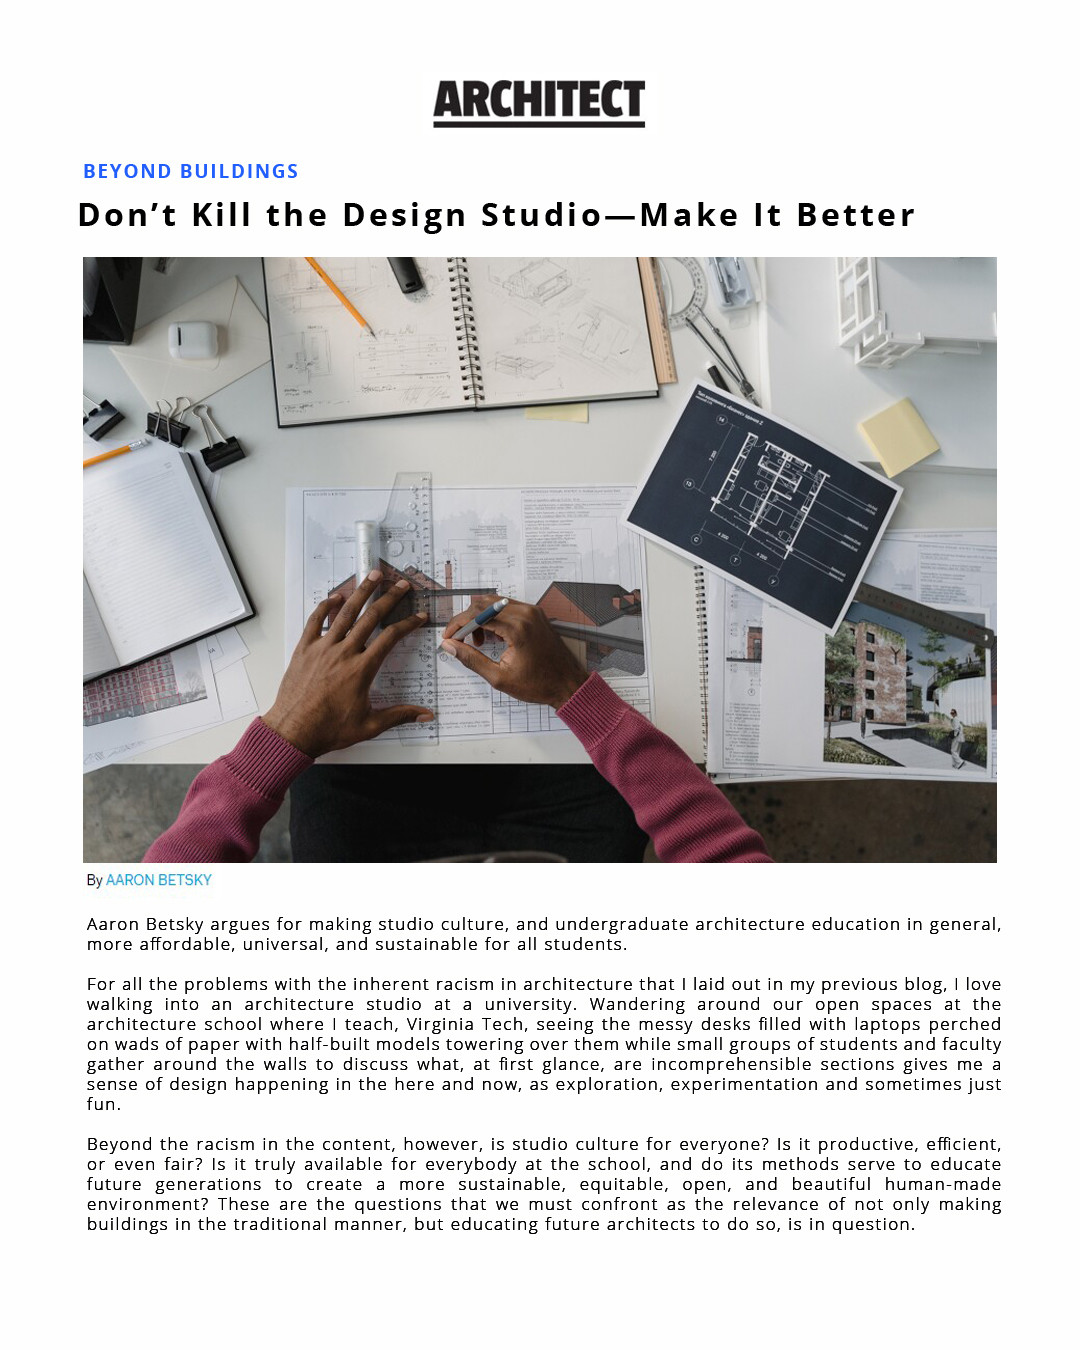 Architect Design Studio Article